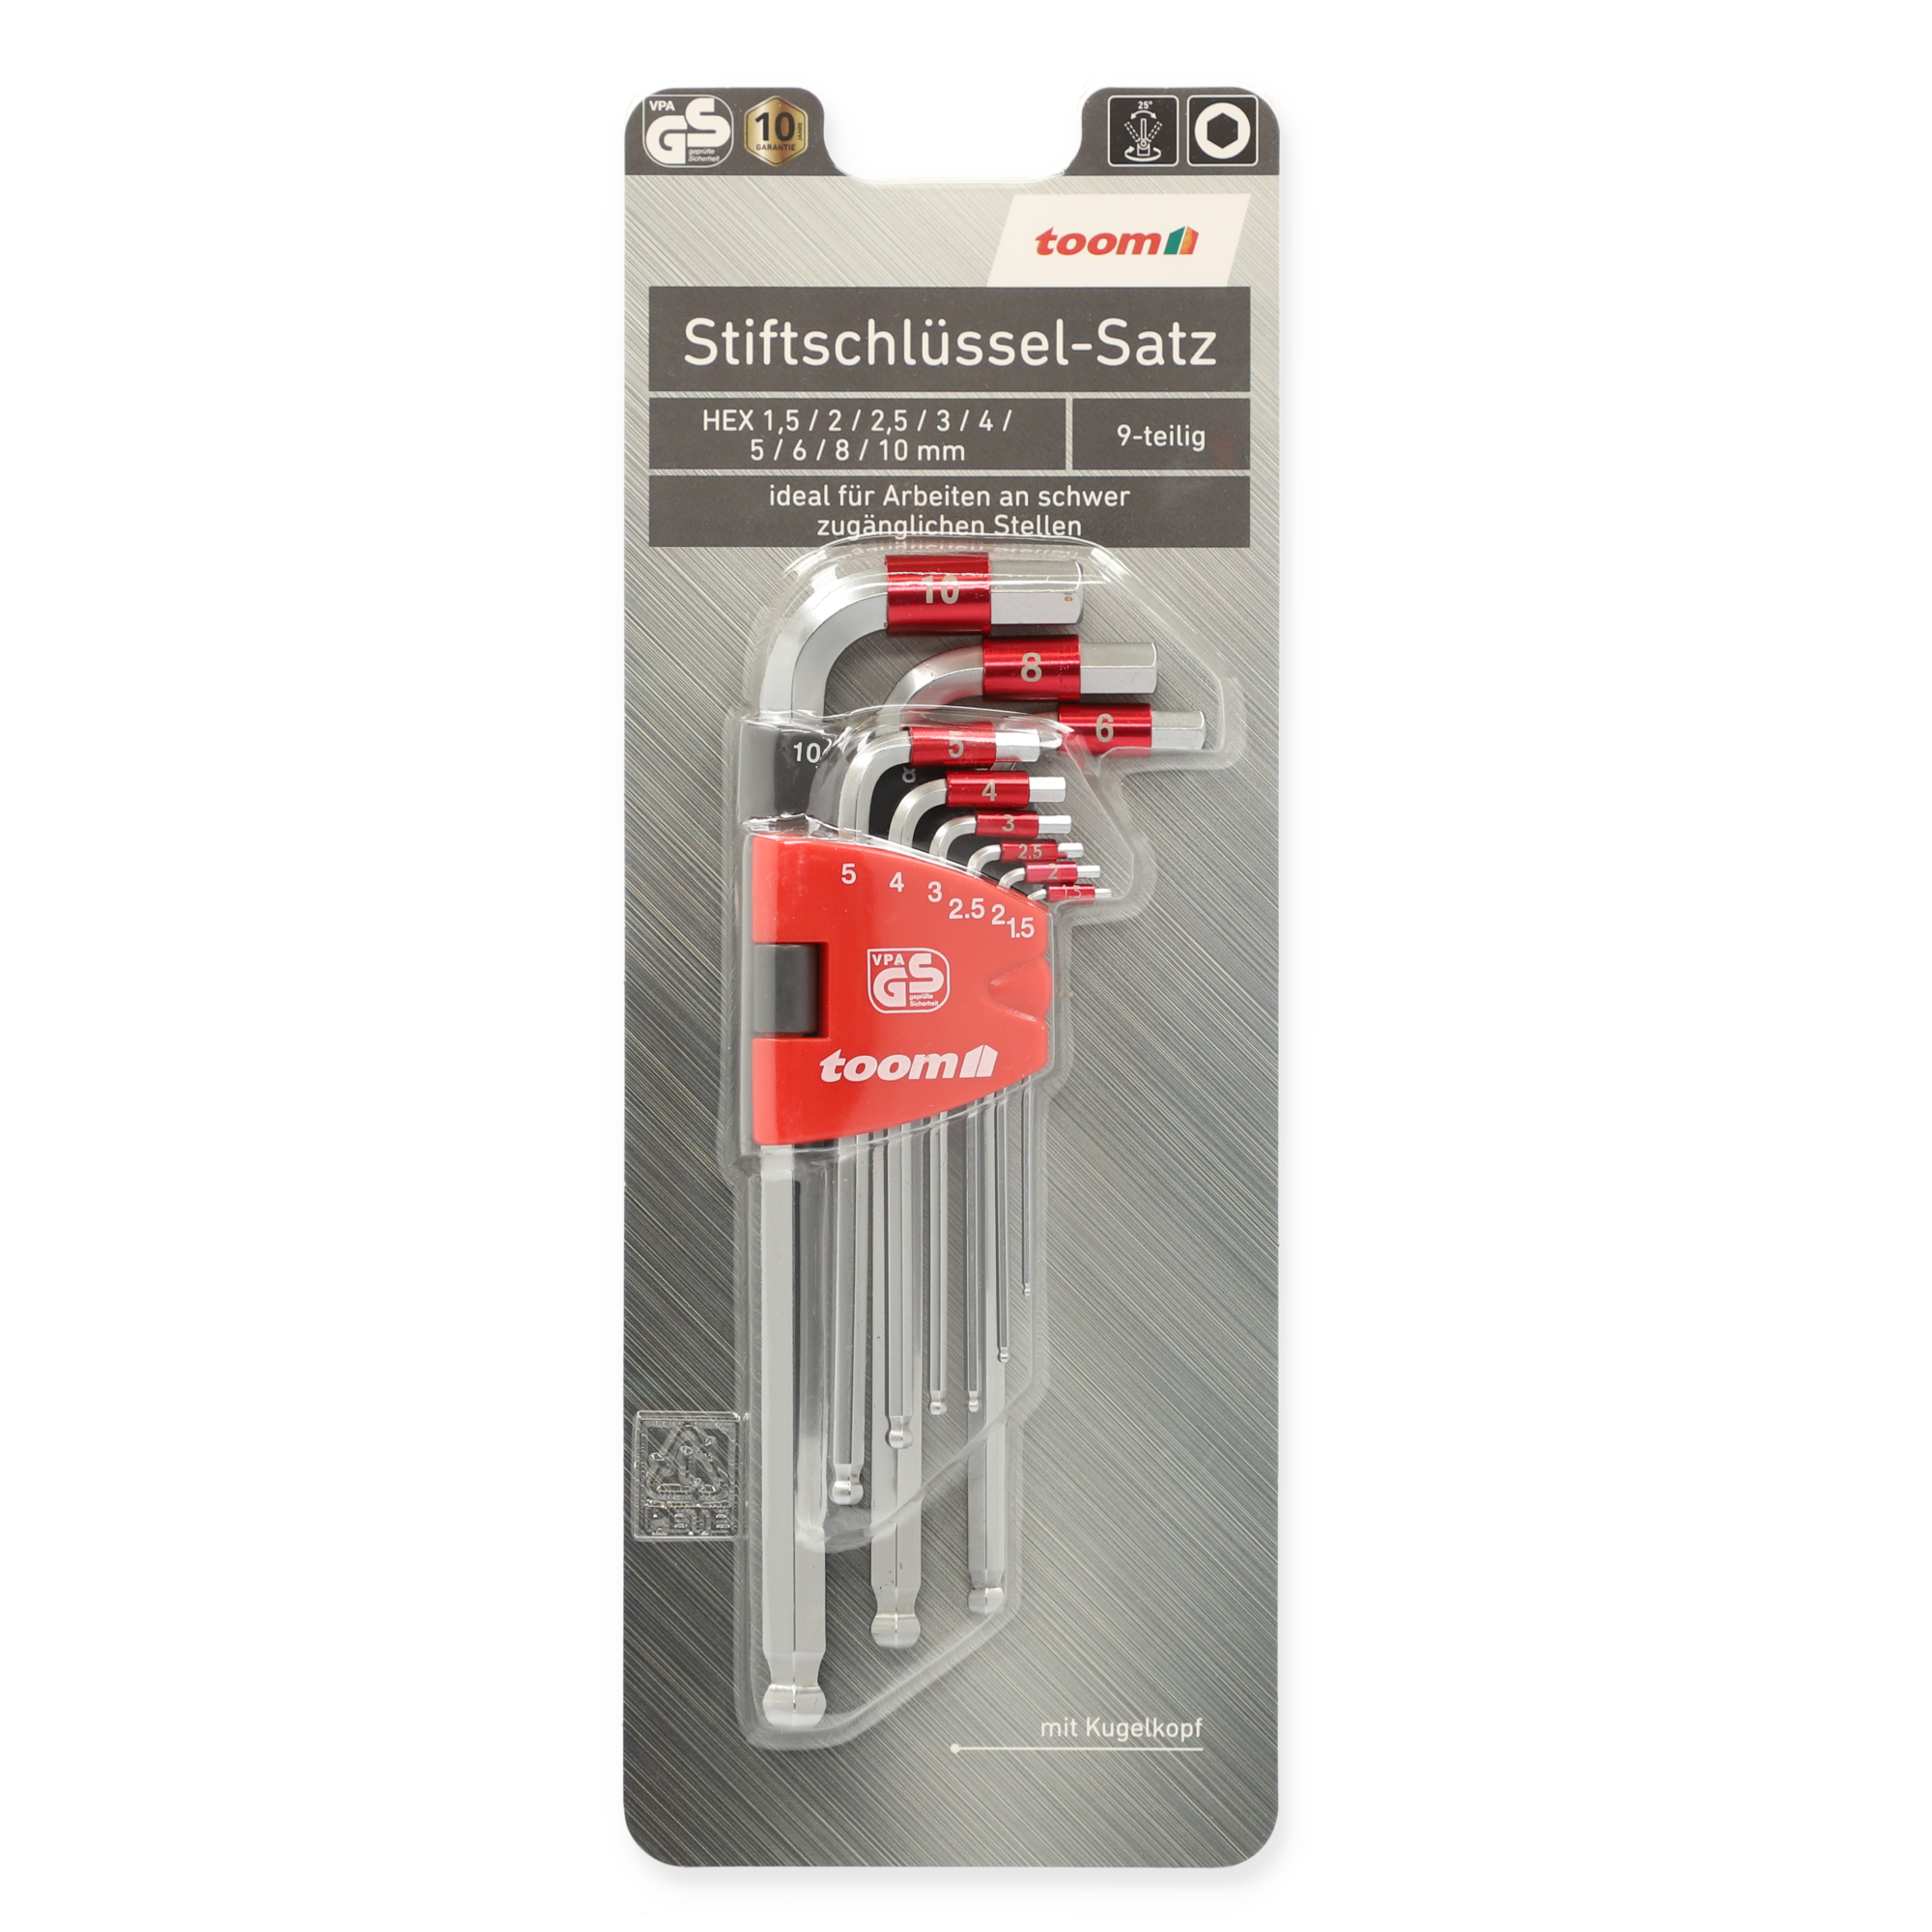 Stiftschlüssel-Set HEX 9-teilig + product picture